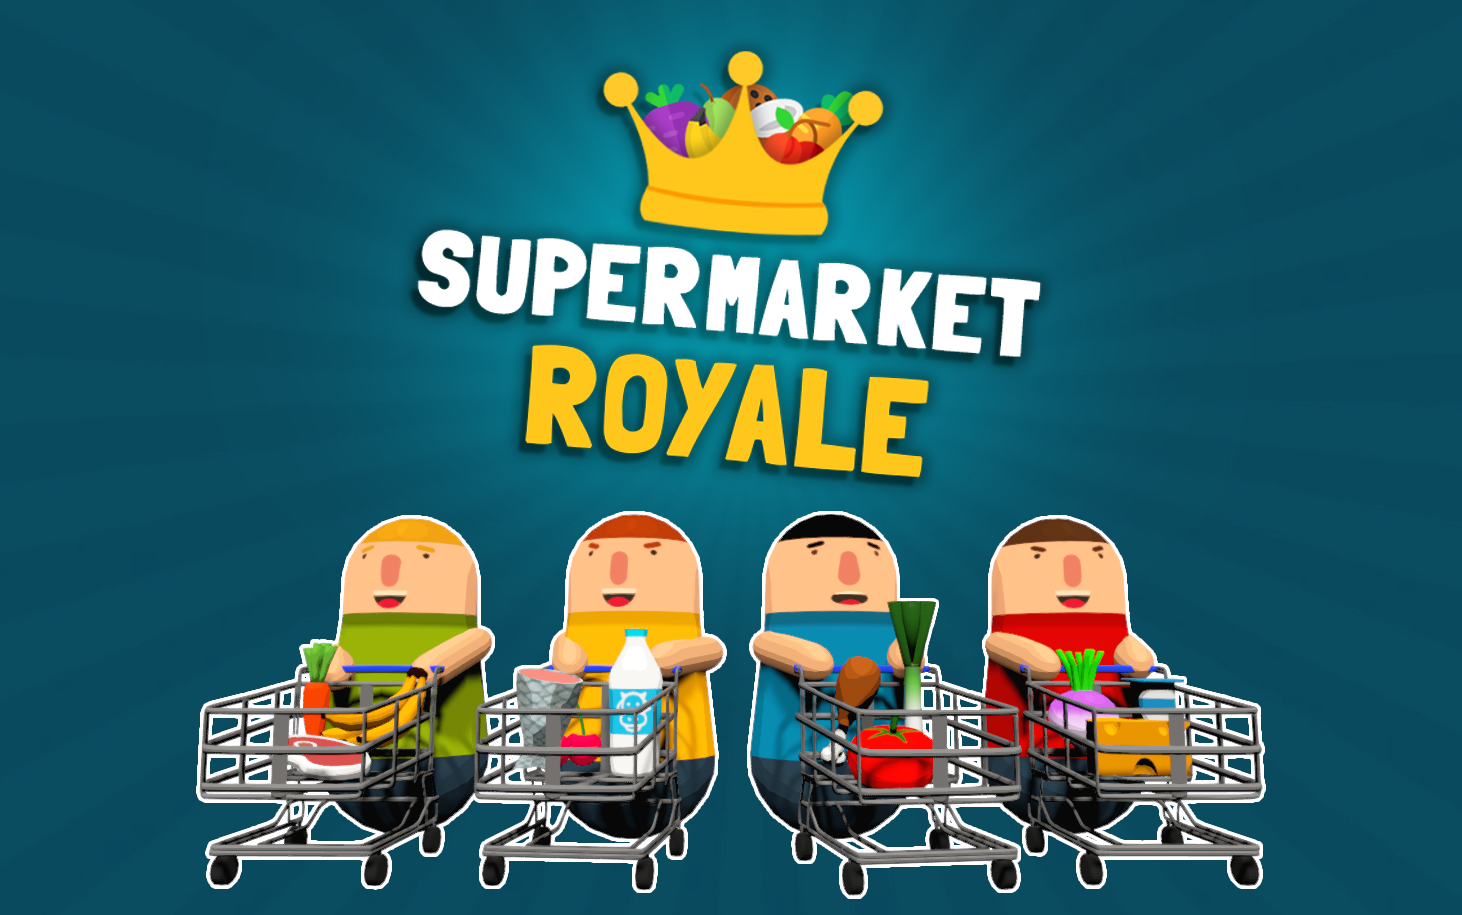 Supermarket Royale